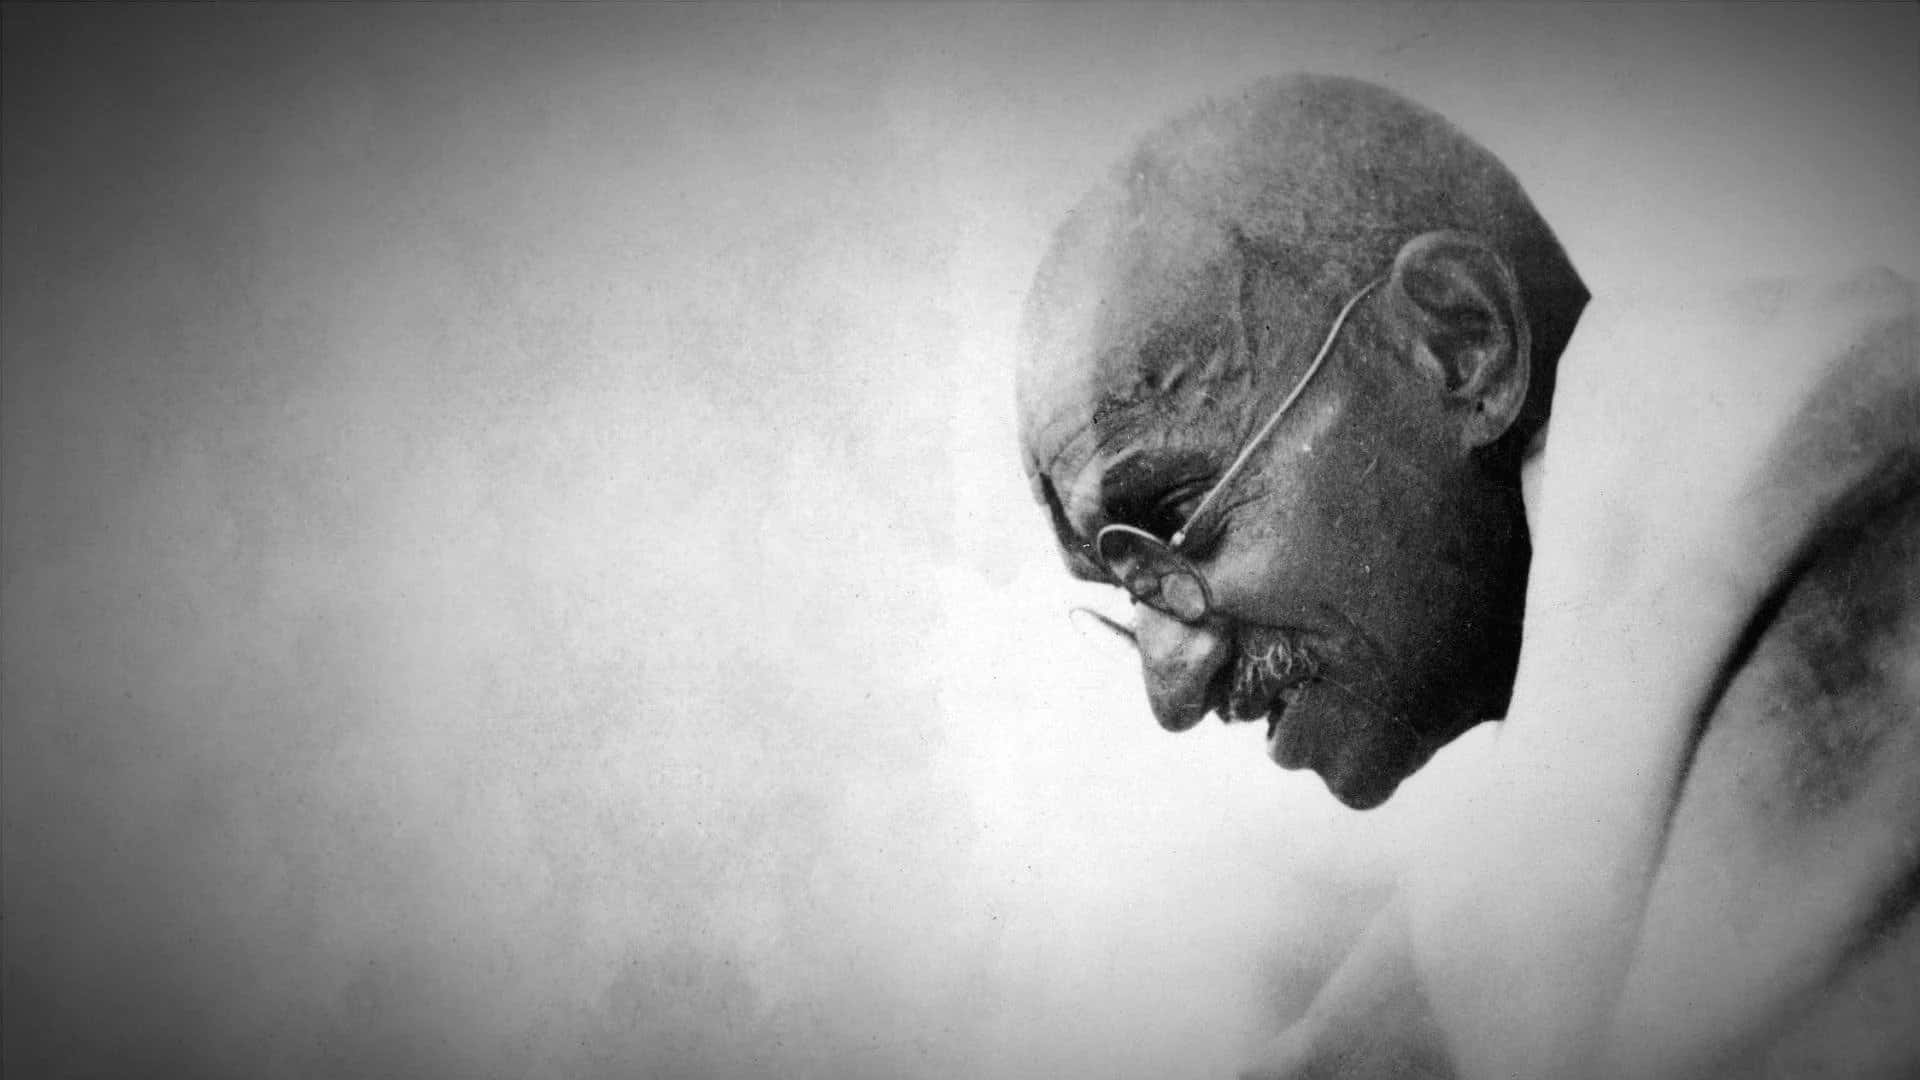 A portrait of Mahatma Gandhi: Non-Violent, Steadfast and Compassionate.